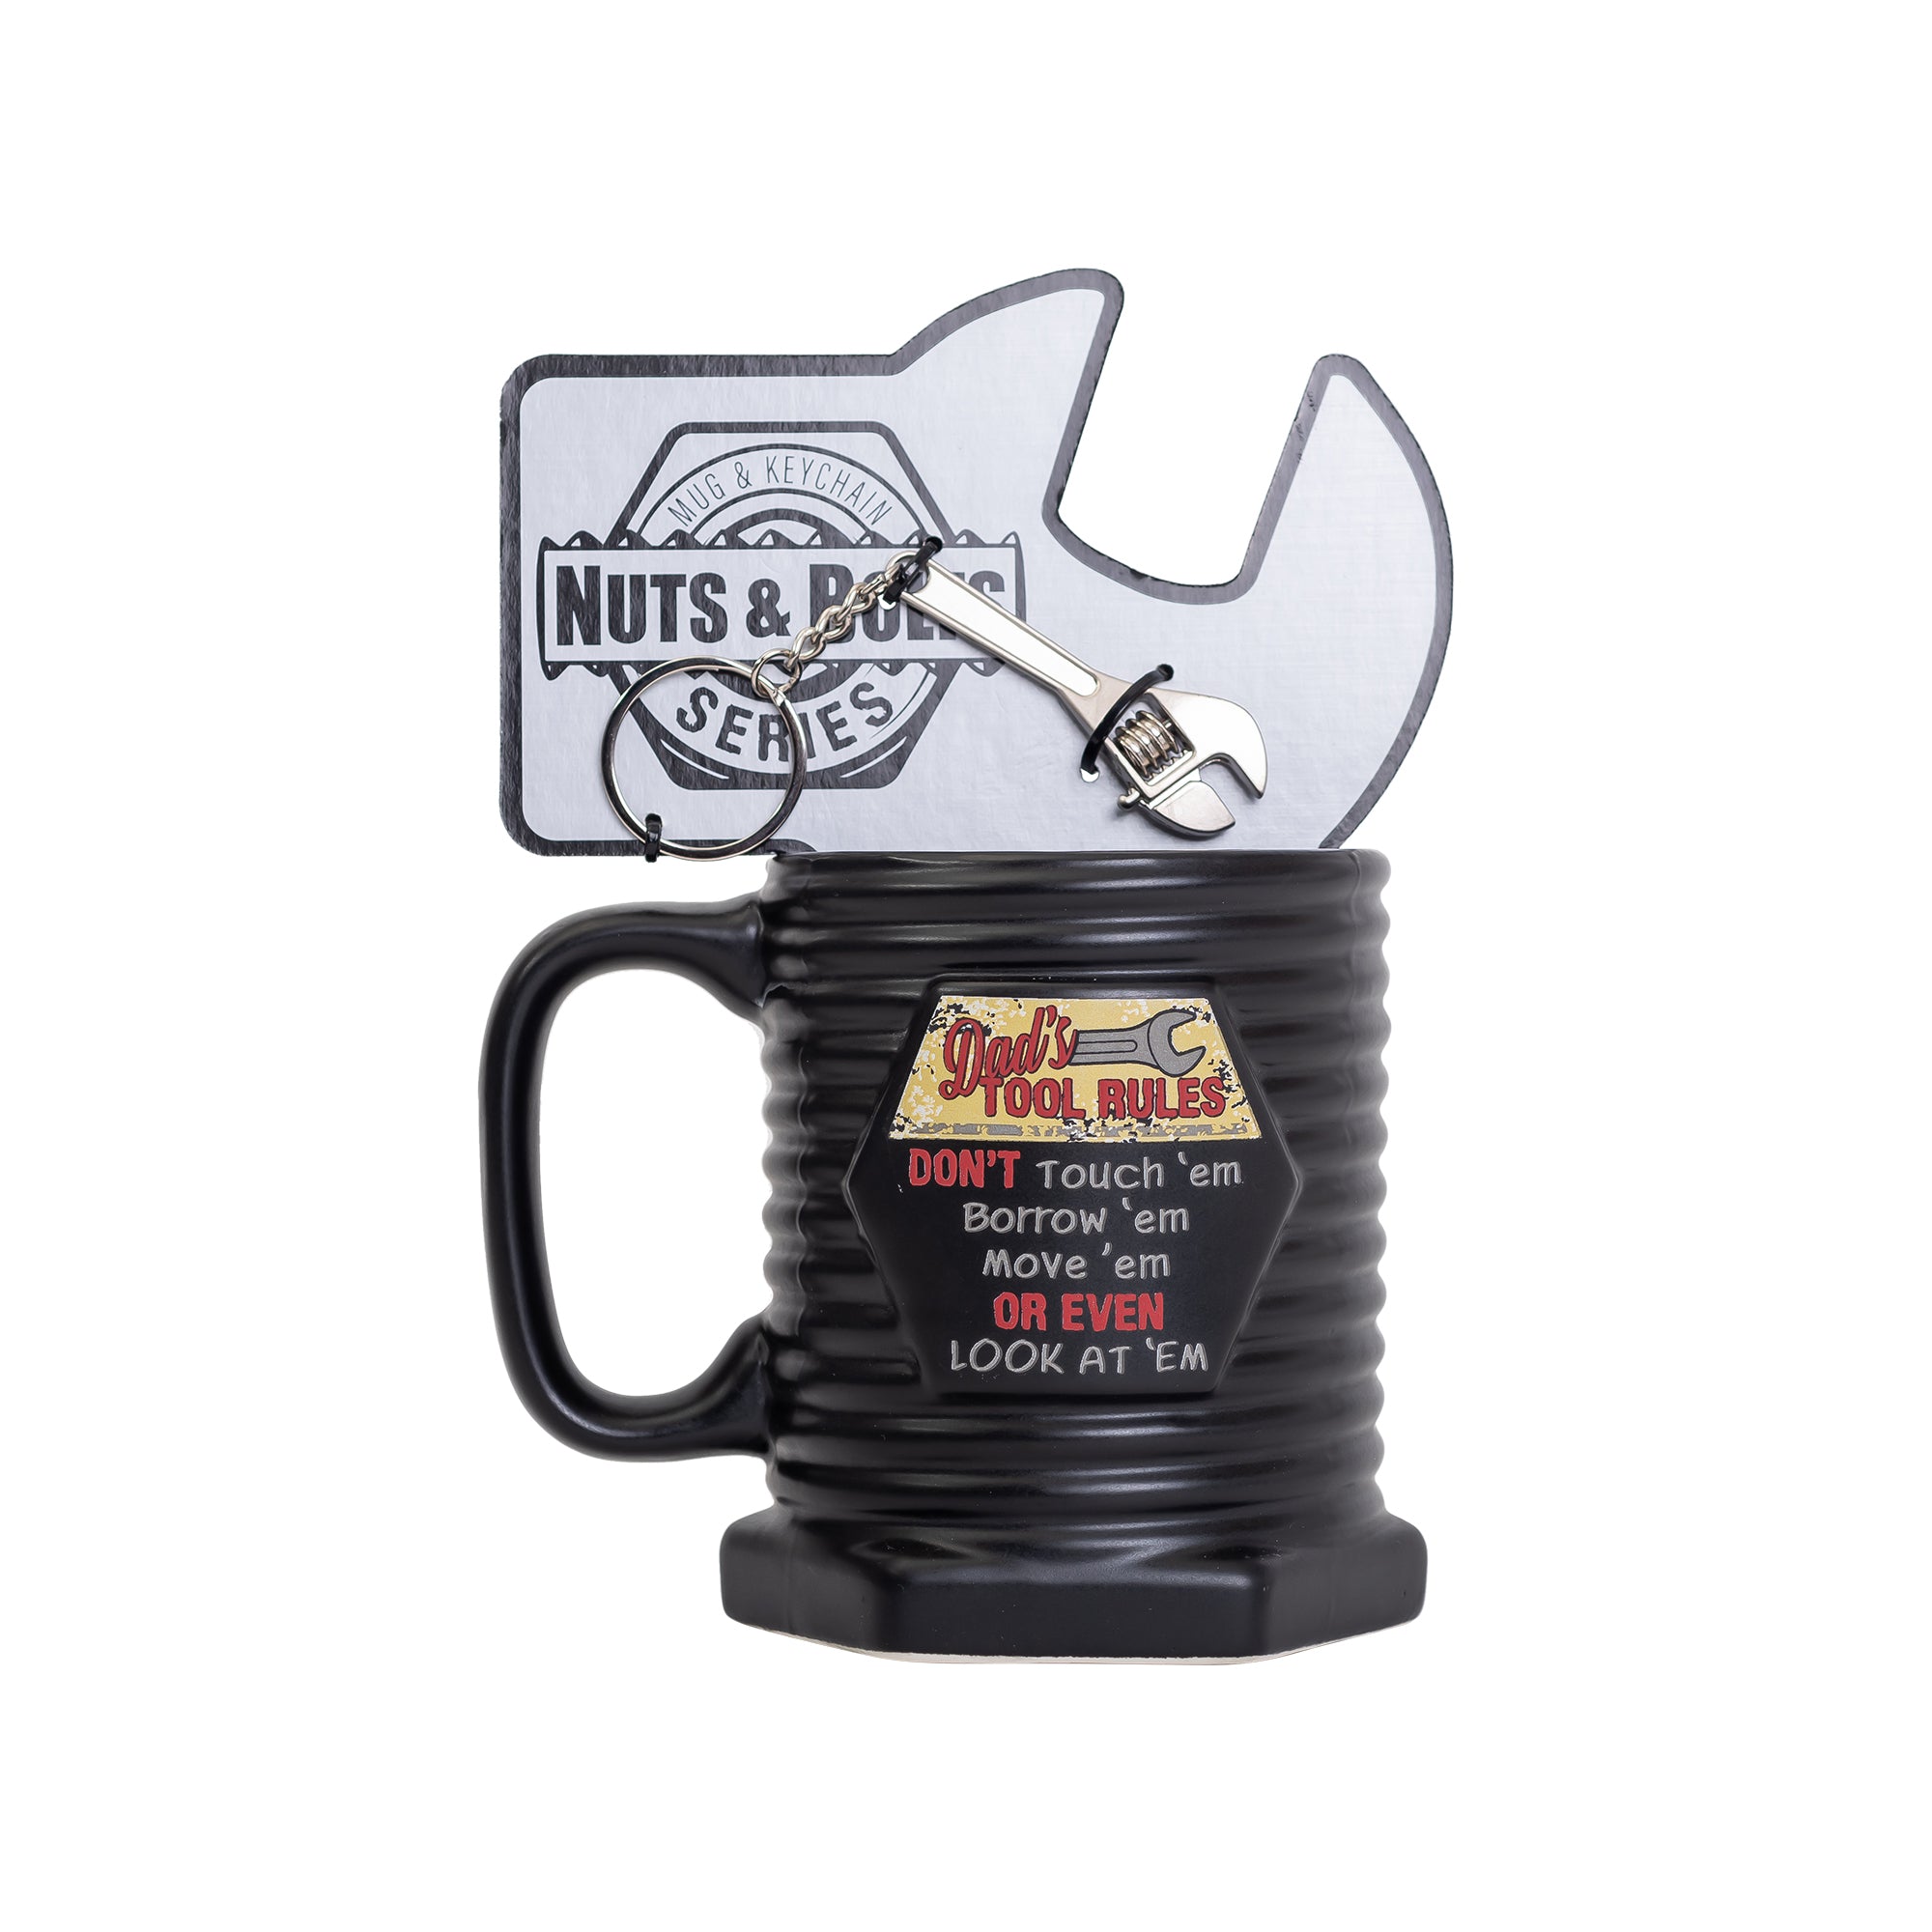 Nuts & Bolts Mug - Tool Rules